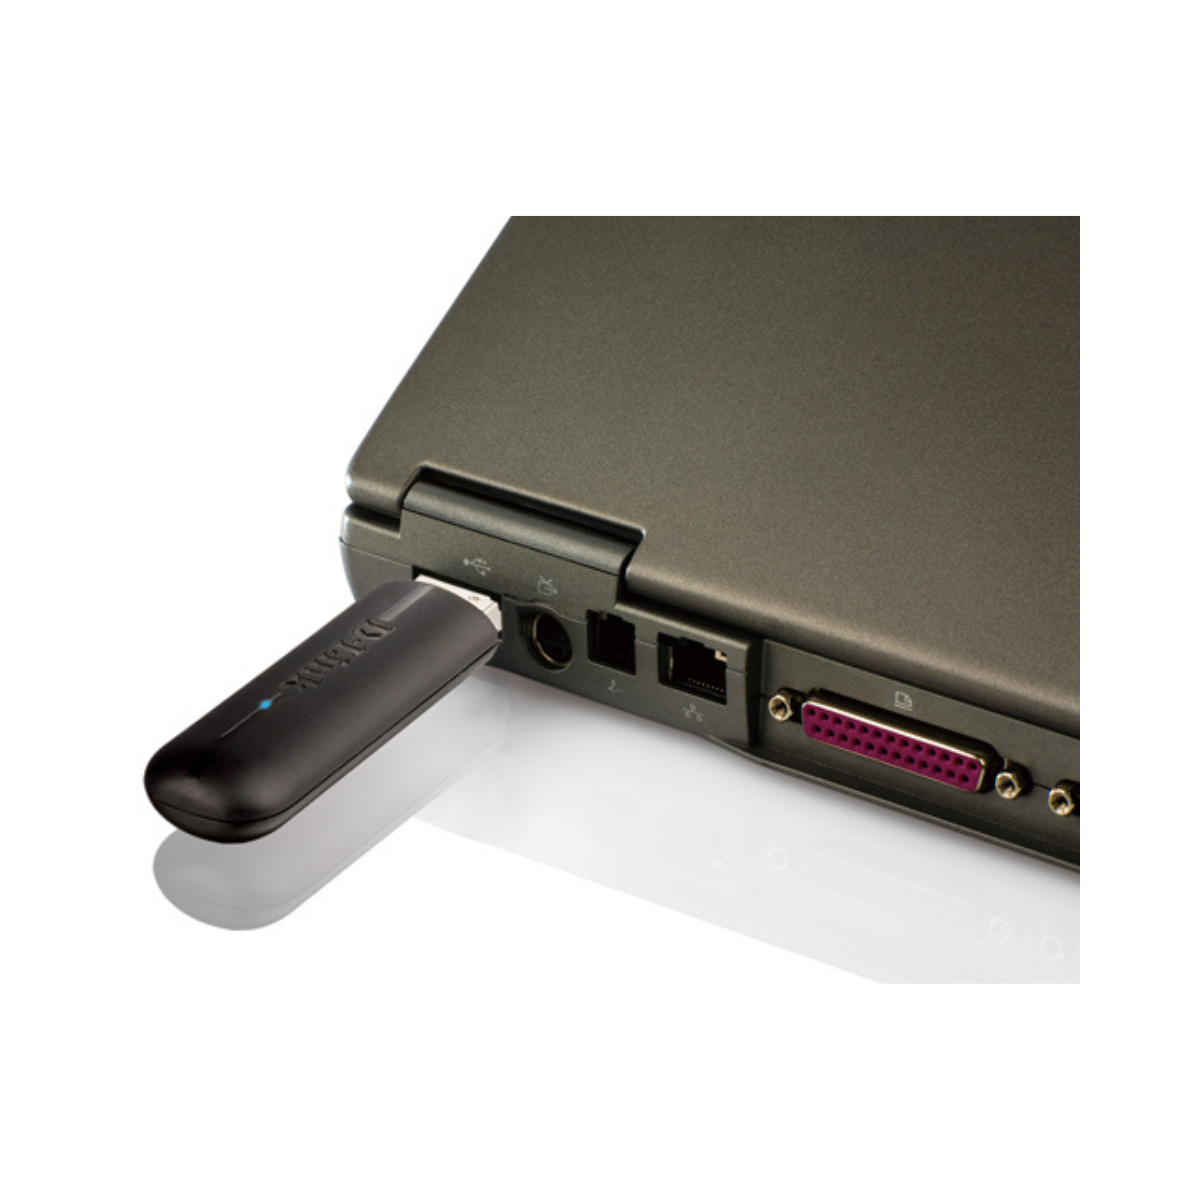 N150 Wireless USB Adapter | DWA-123